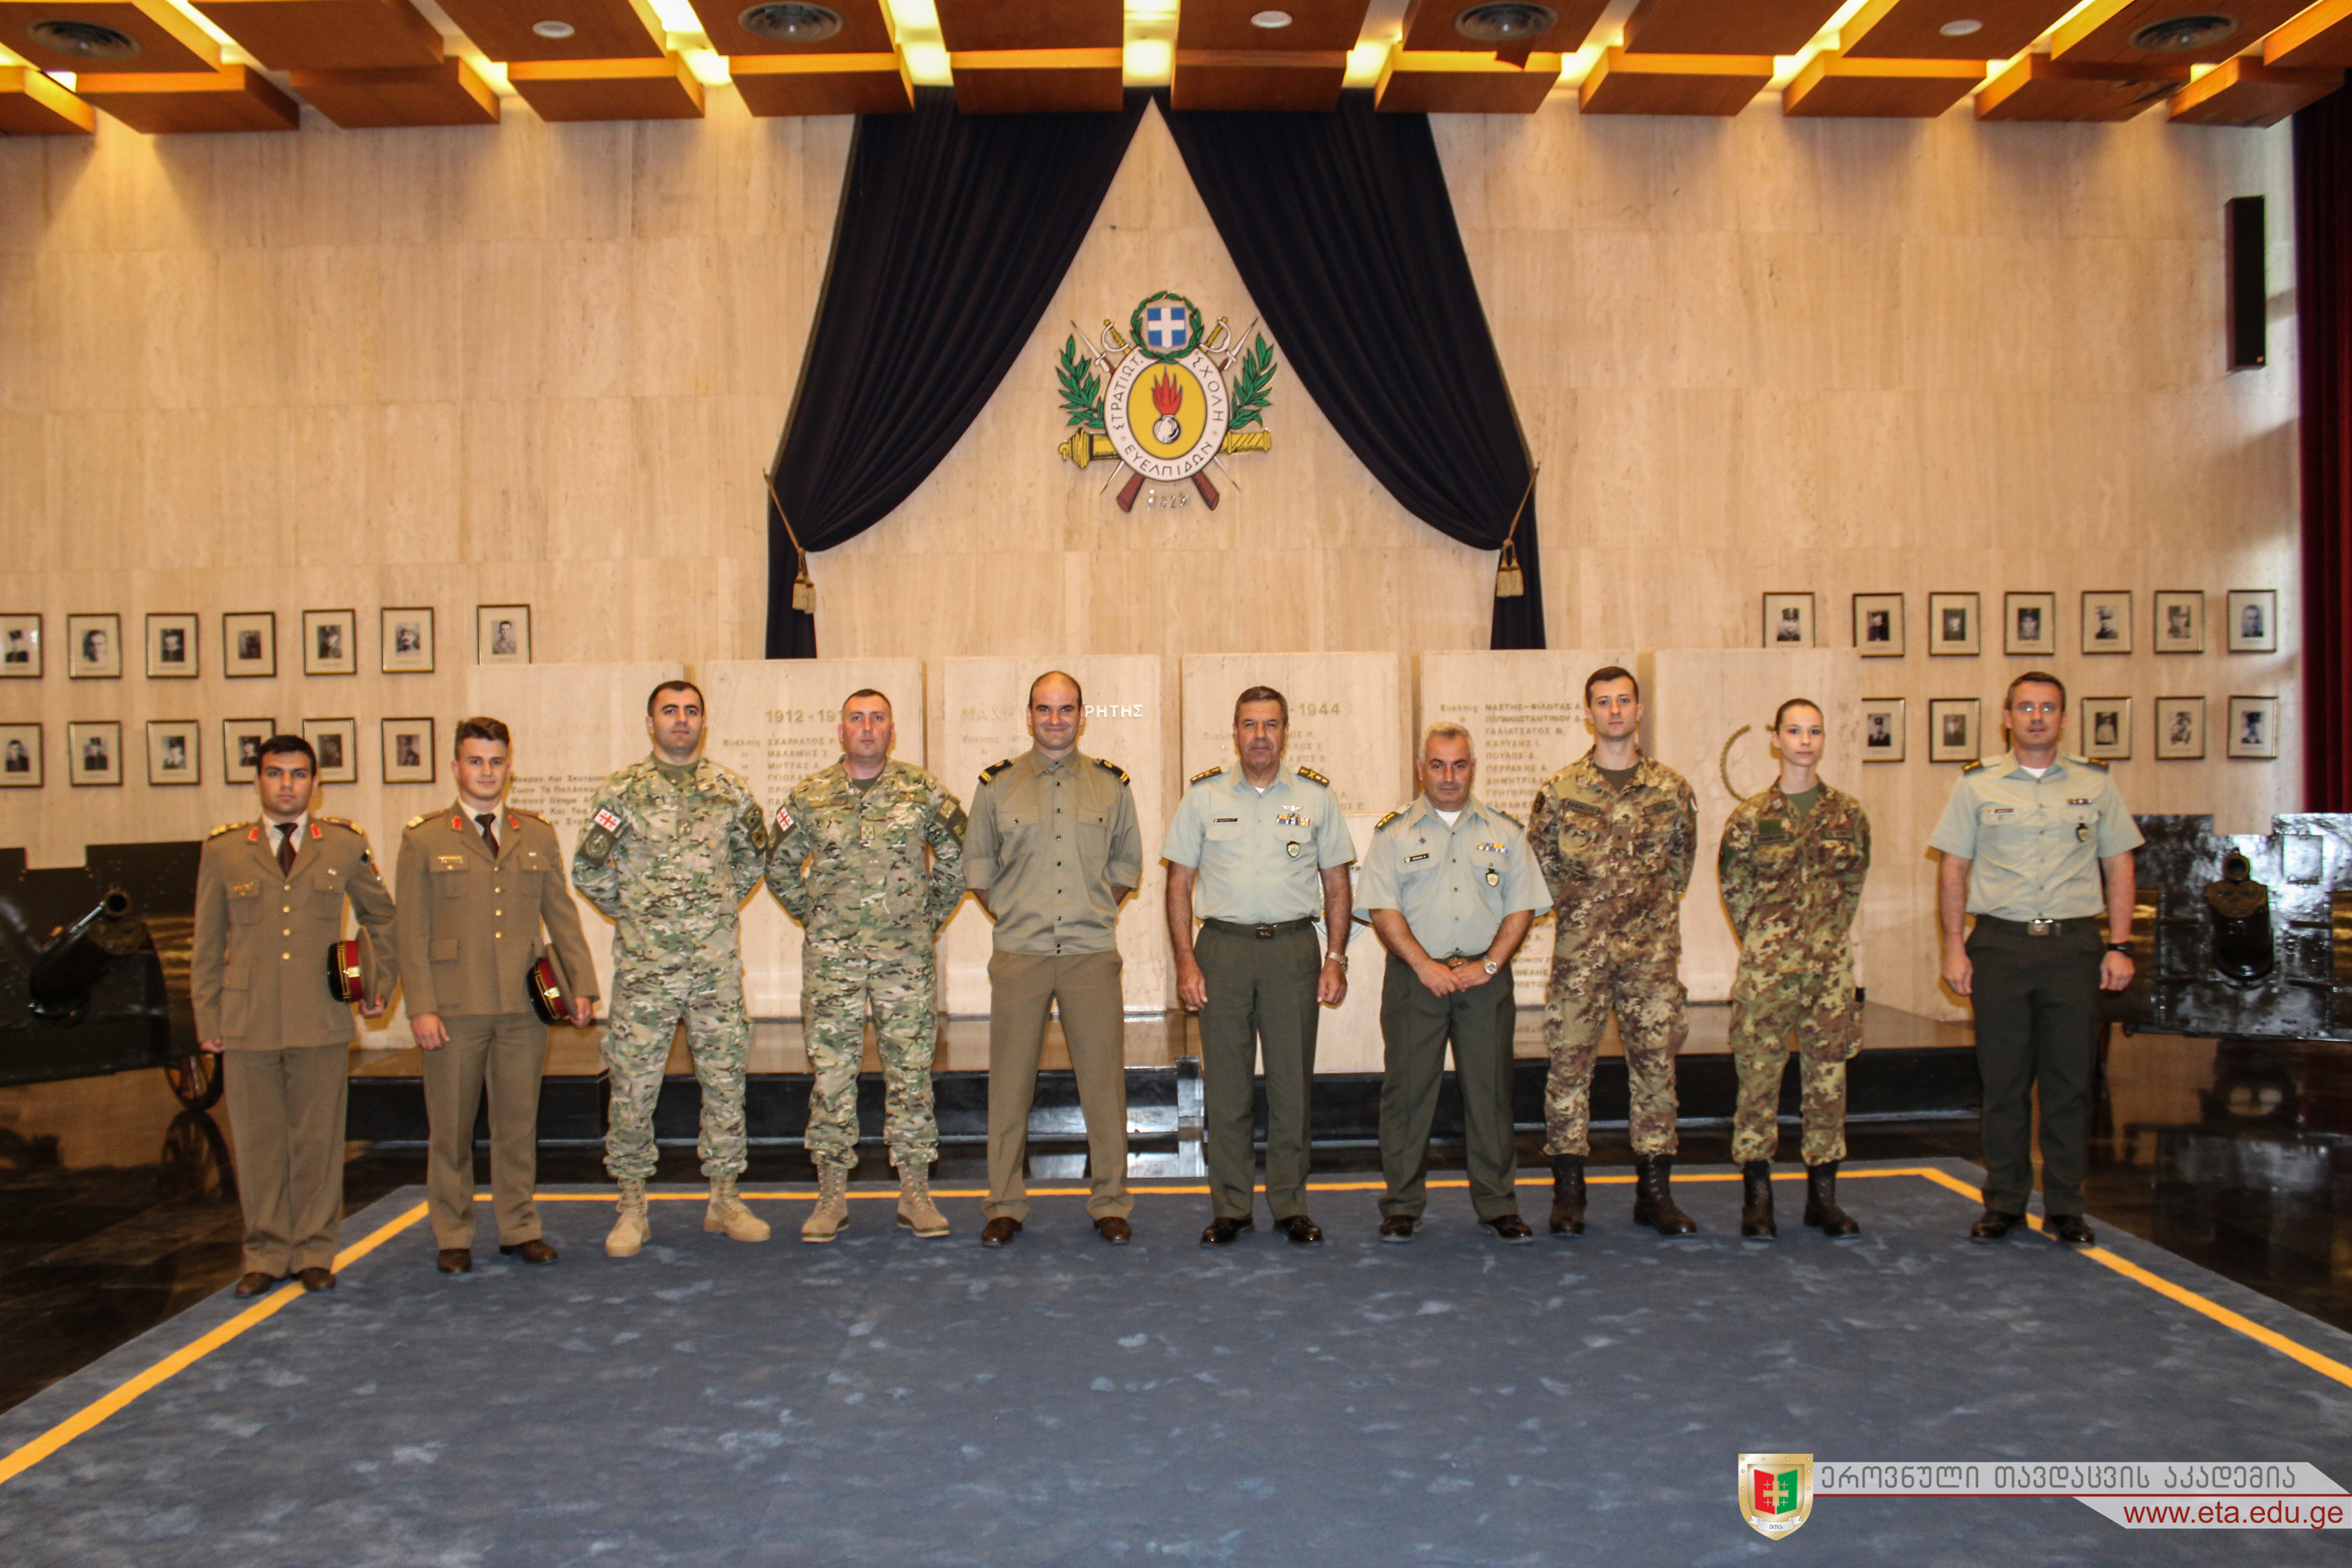 NDA Representatives at Hellenic Army Academy